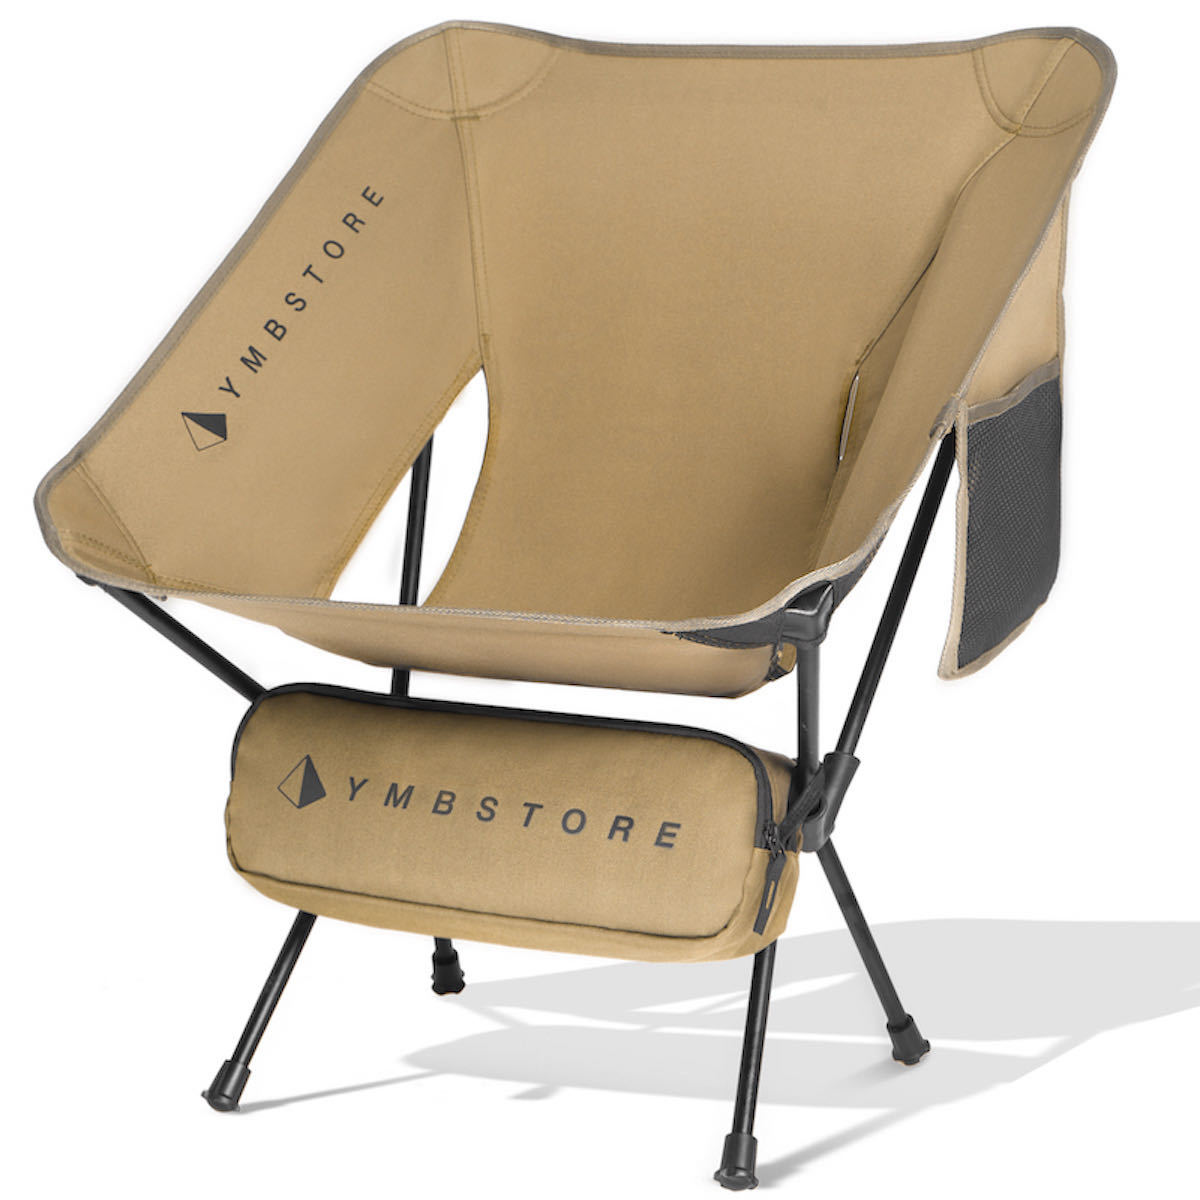 YMBSTORE アウトドア チェア キャンプ 椅子 軽量 折りたたみ コンパクト アルミ イス 携帯 超軽量 ハンモック オシャレ ロータイプ